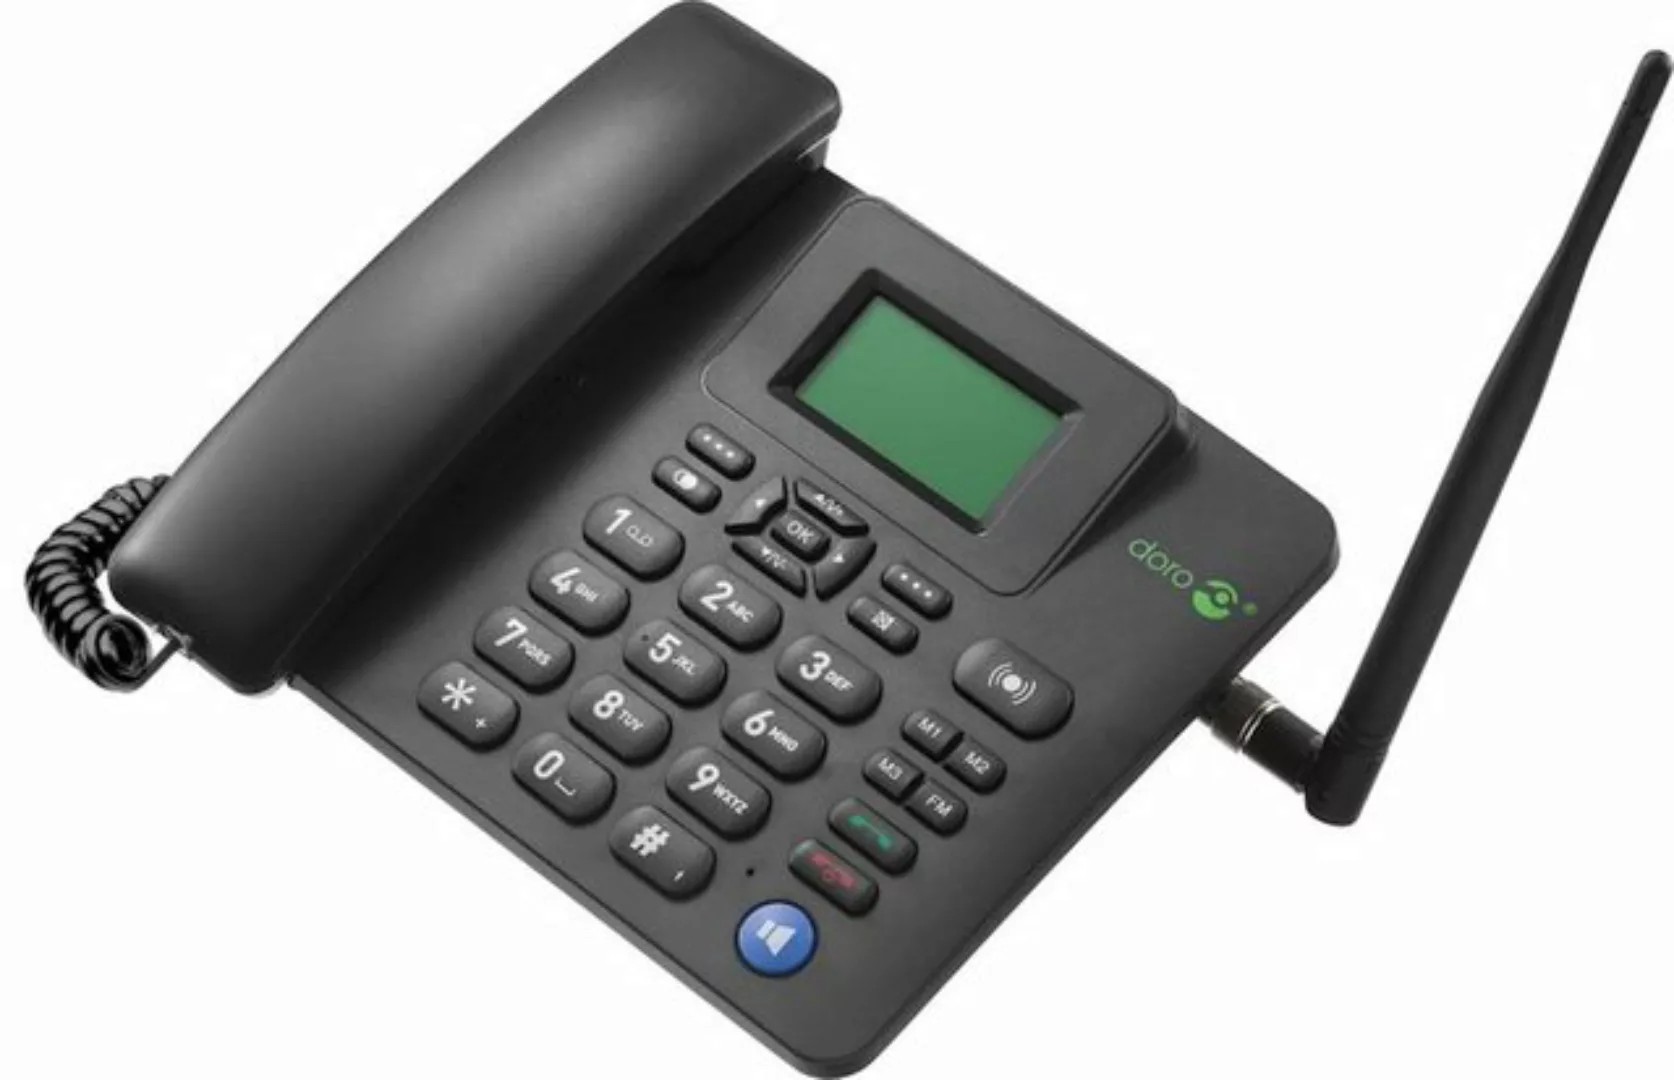 Doro DORO Telefon 4100H Kabelgebundenes Telefon günstig online kaufen